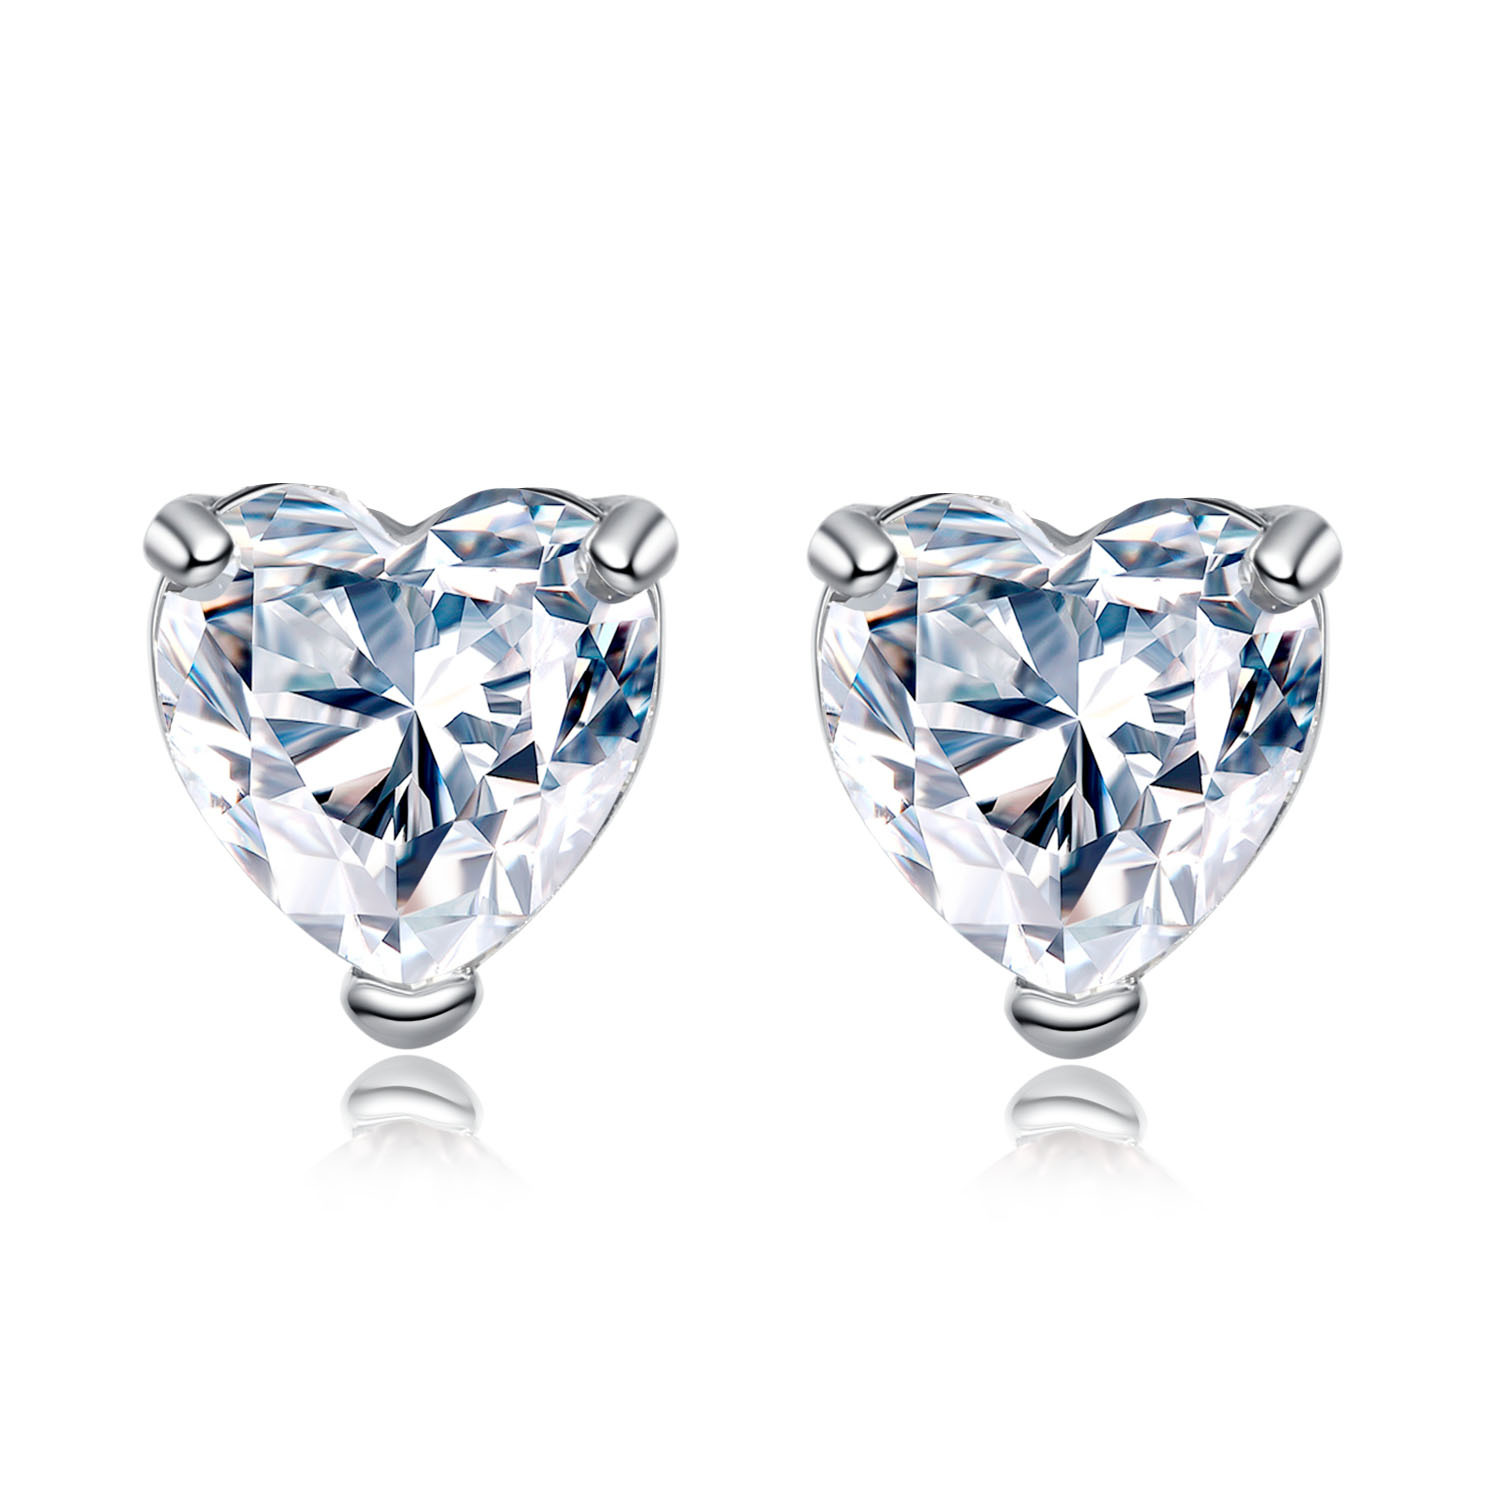 20pc Silver Heart-shaped Crystal Stud Earrings I GCJ234